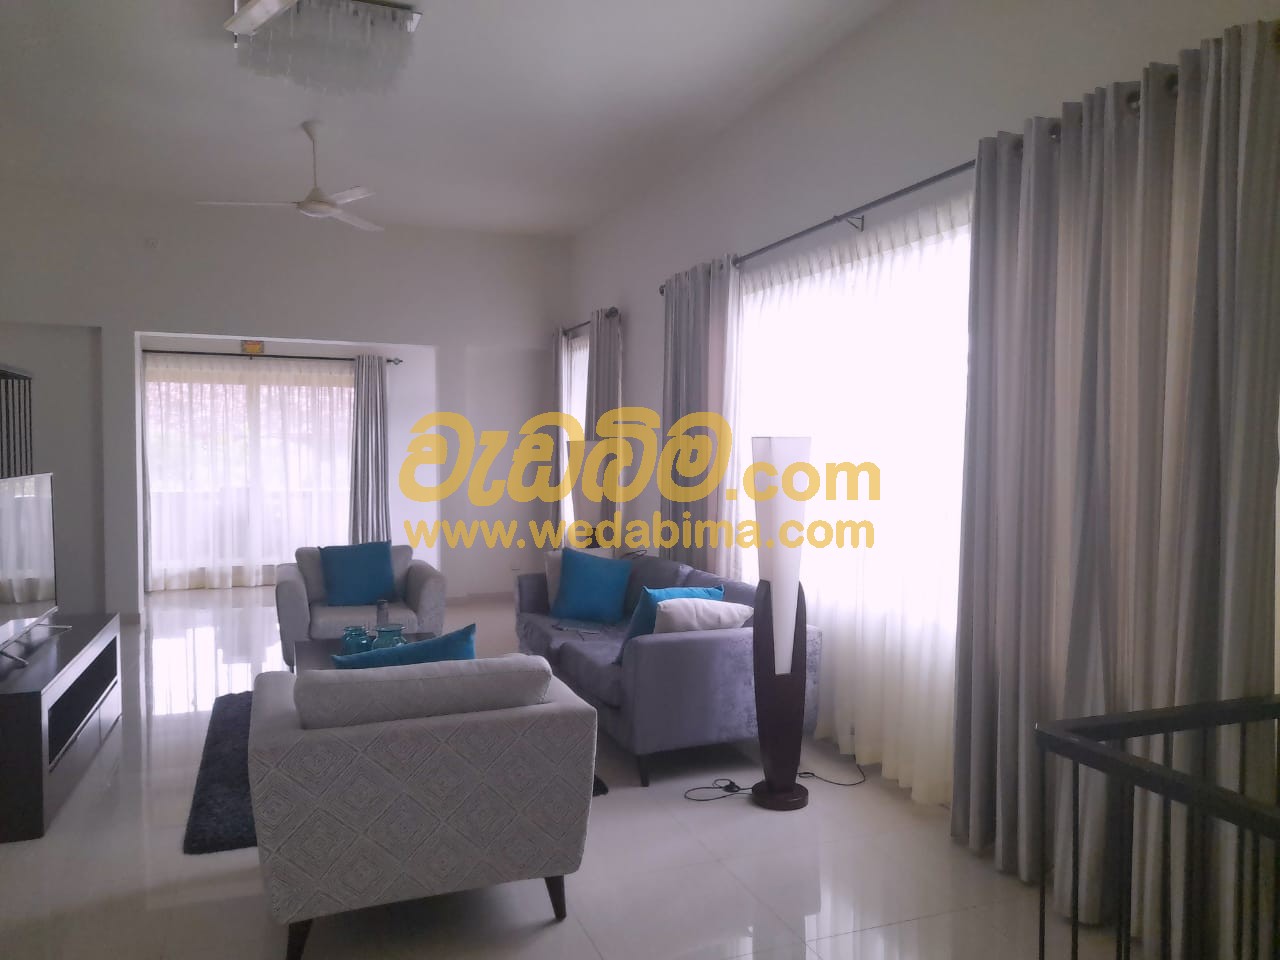 Living Room Curtain Designs price in Sri Lanka | wedabima.com